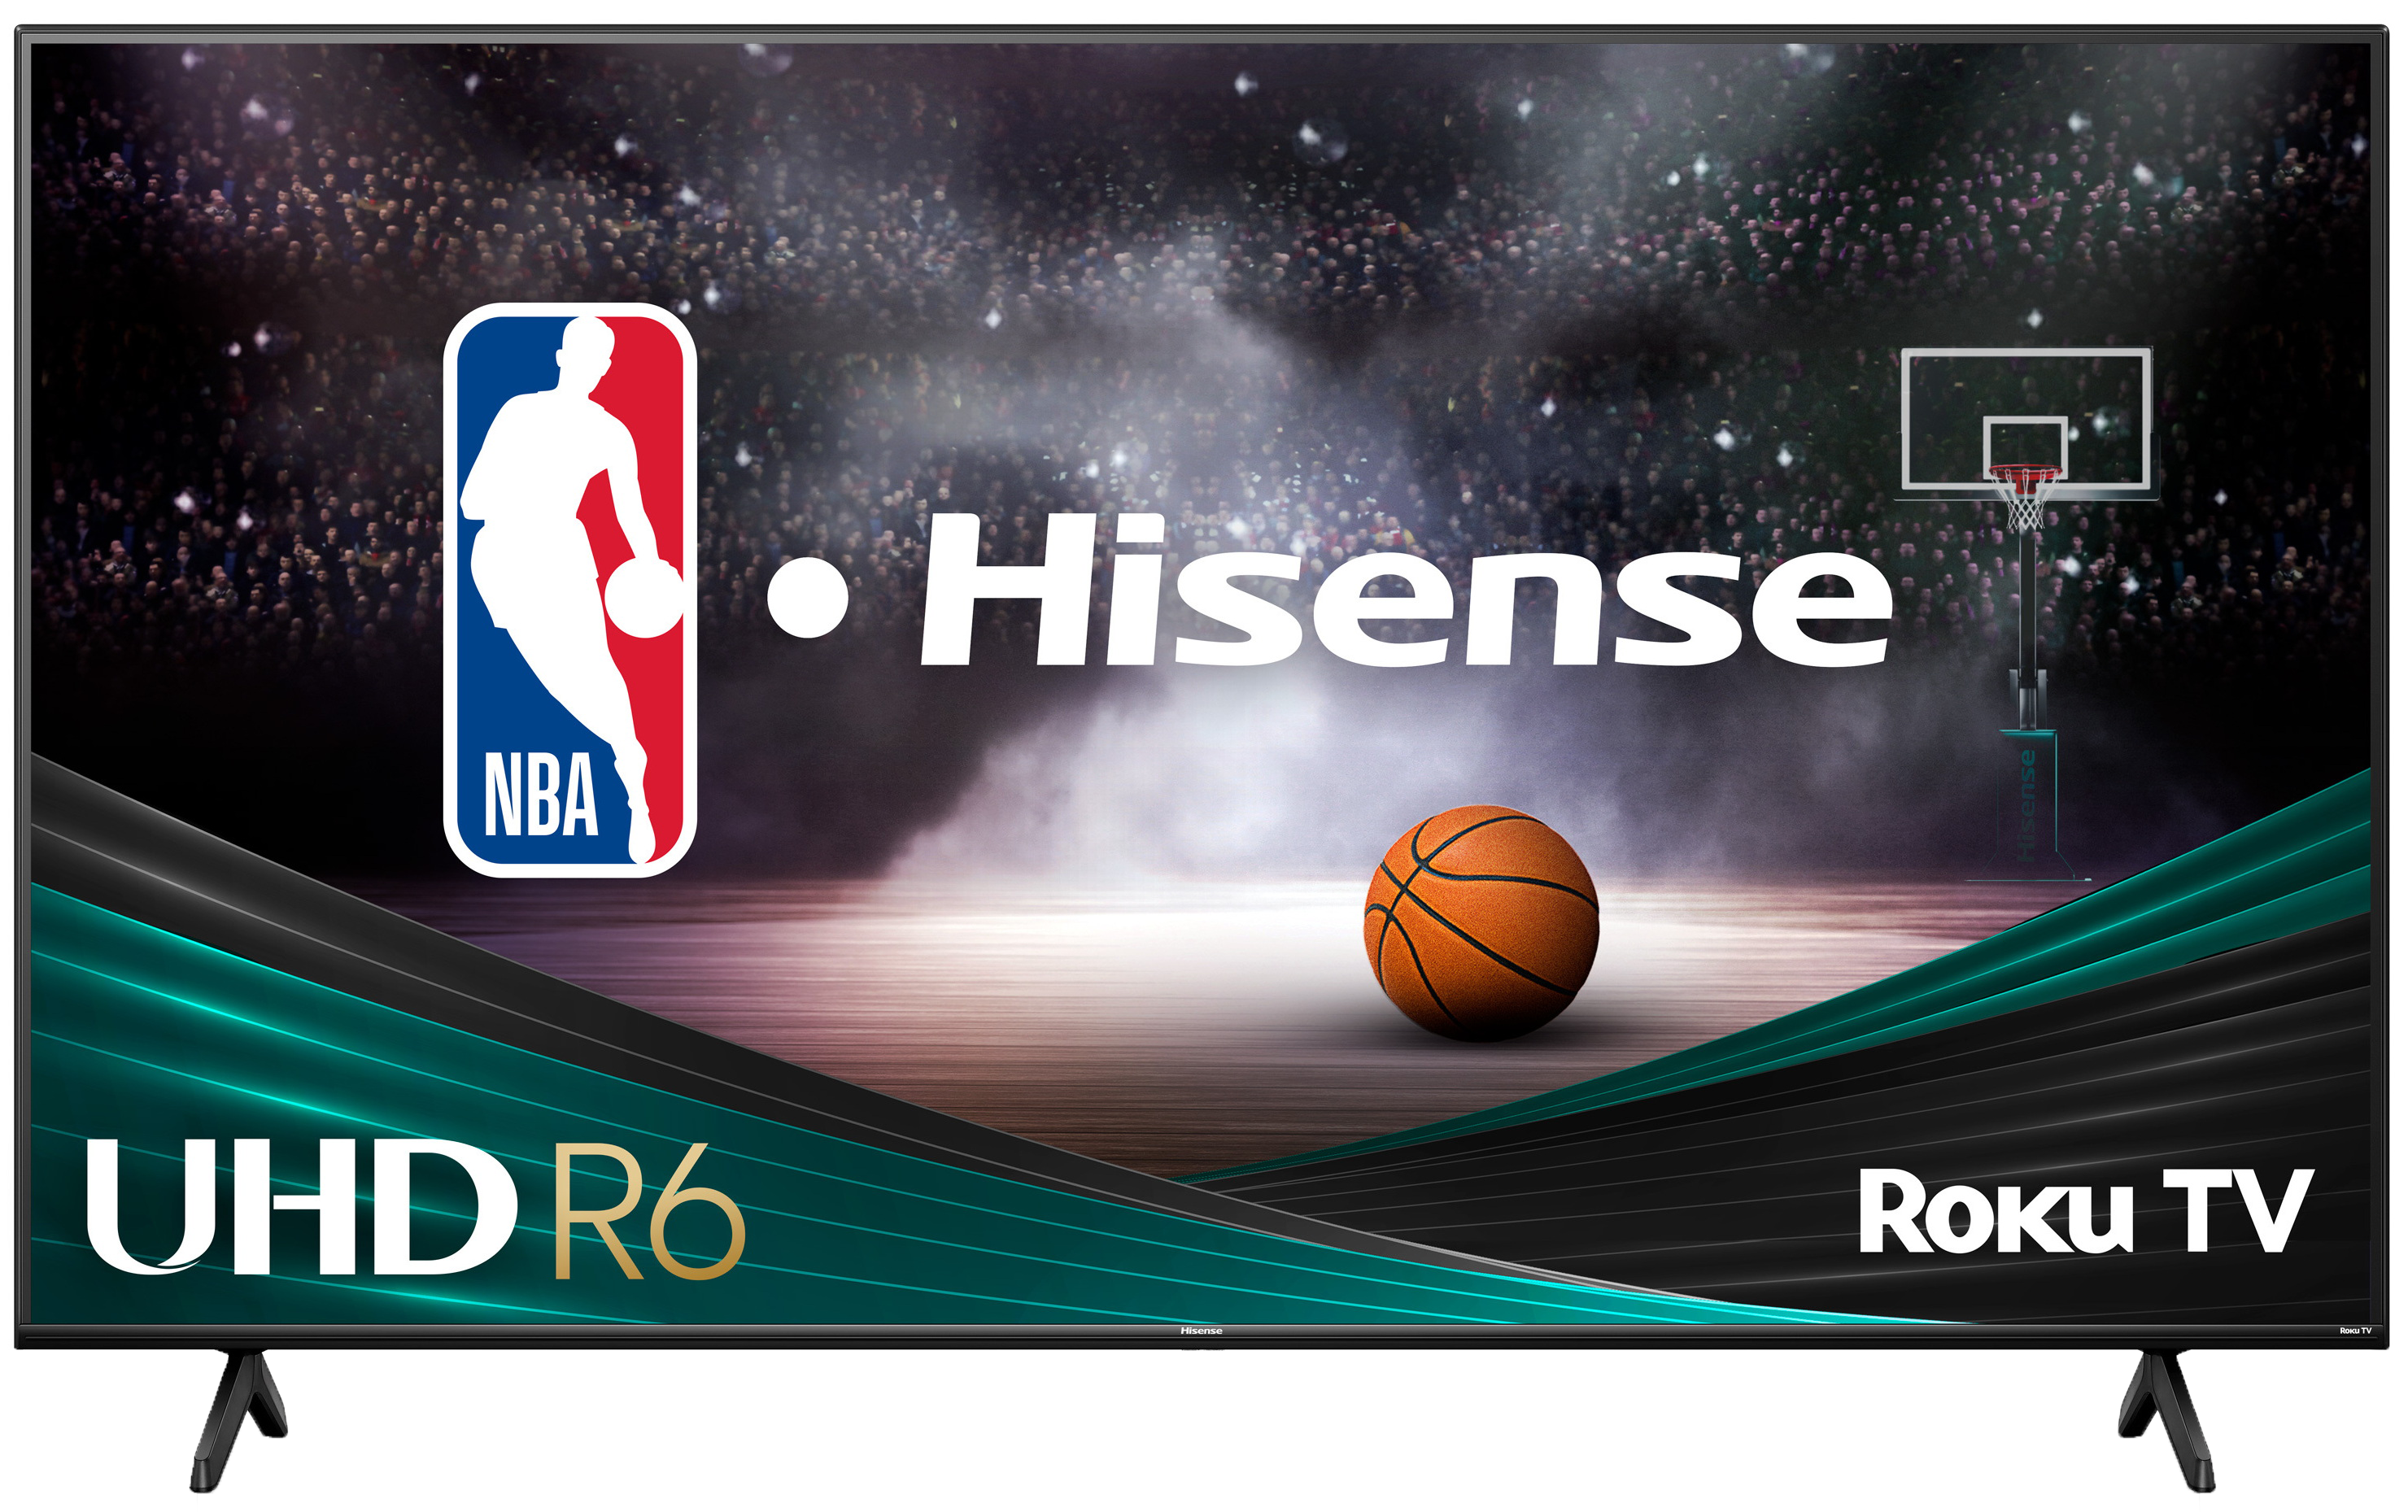 Hisense 58" Class 4K UHD LED LCD Roku Smart TV HDR R6 Series 58R6E3 - image 1 of 22